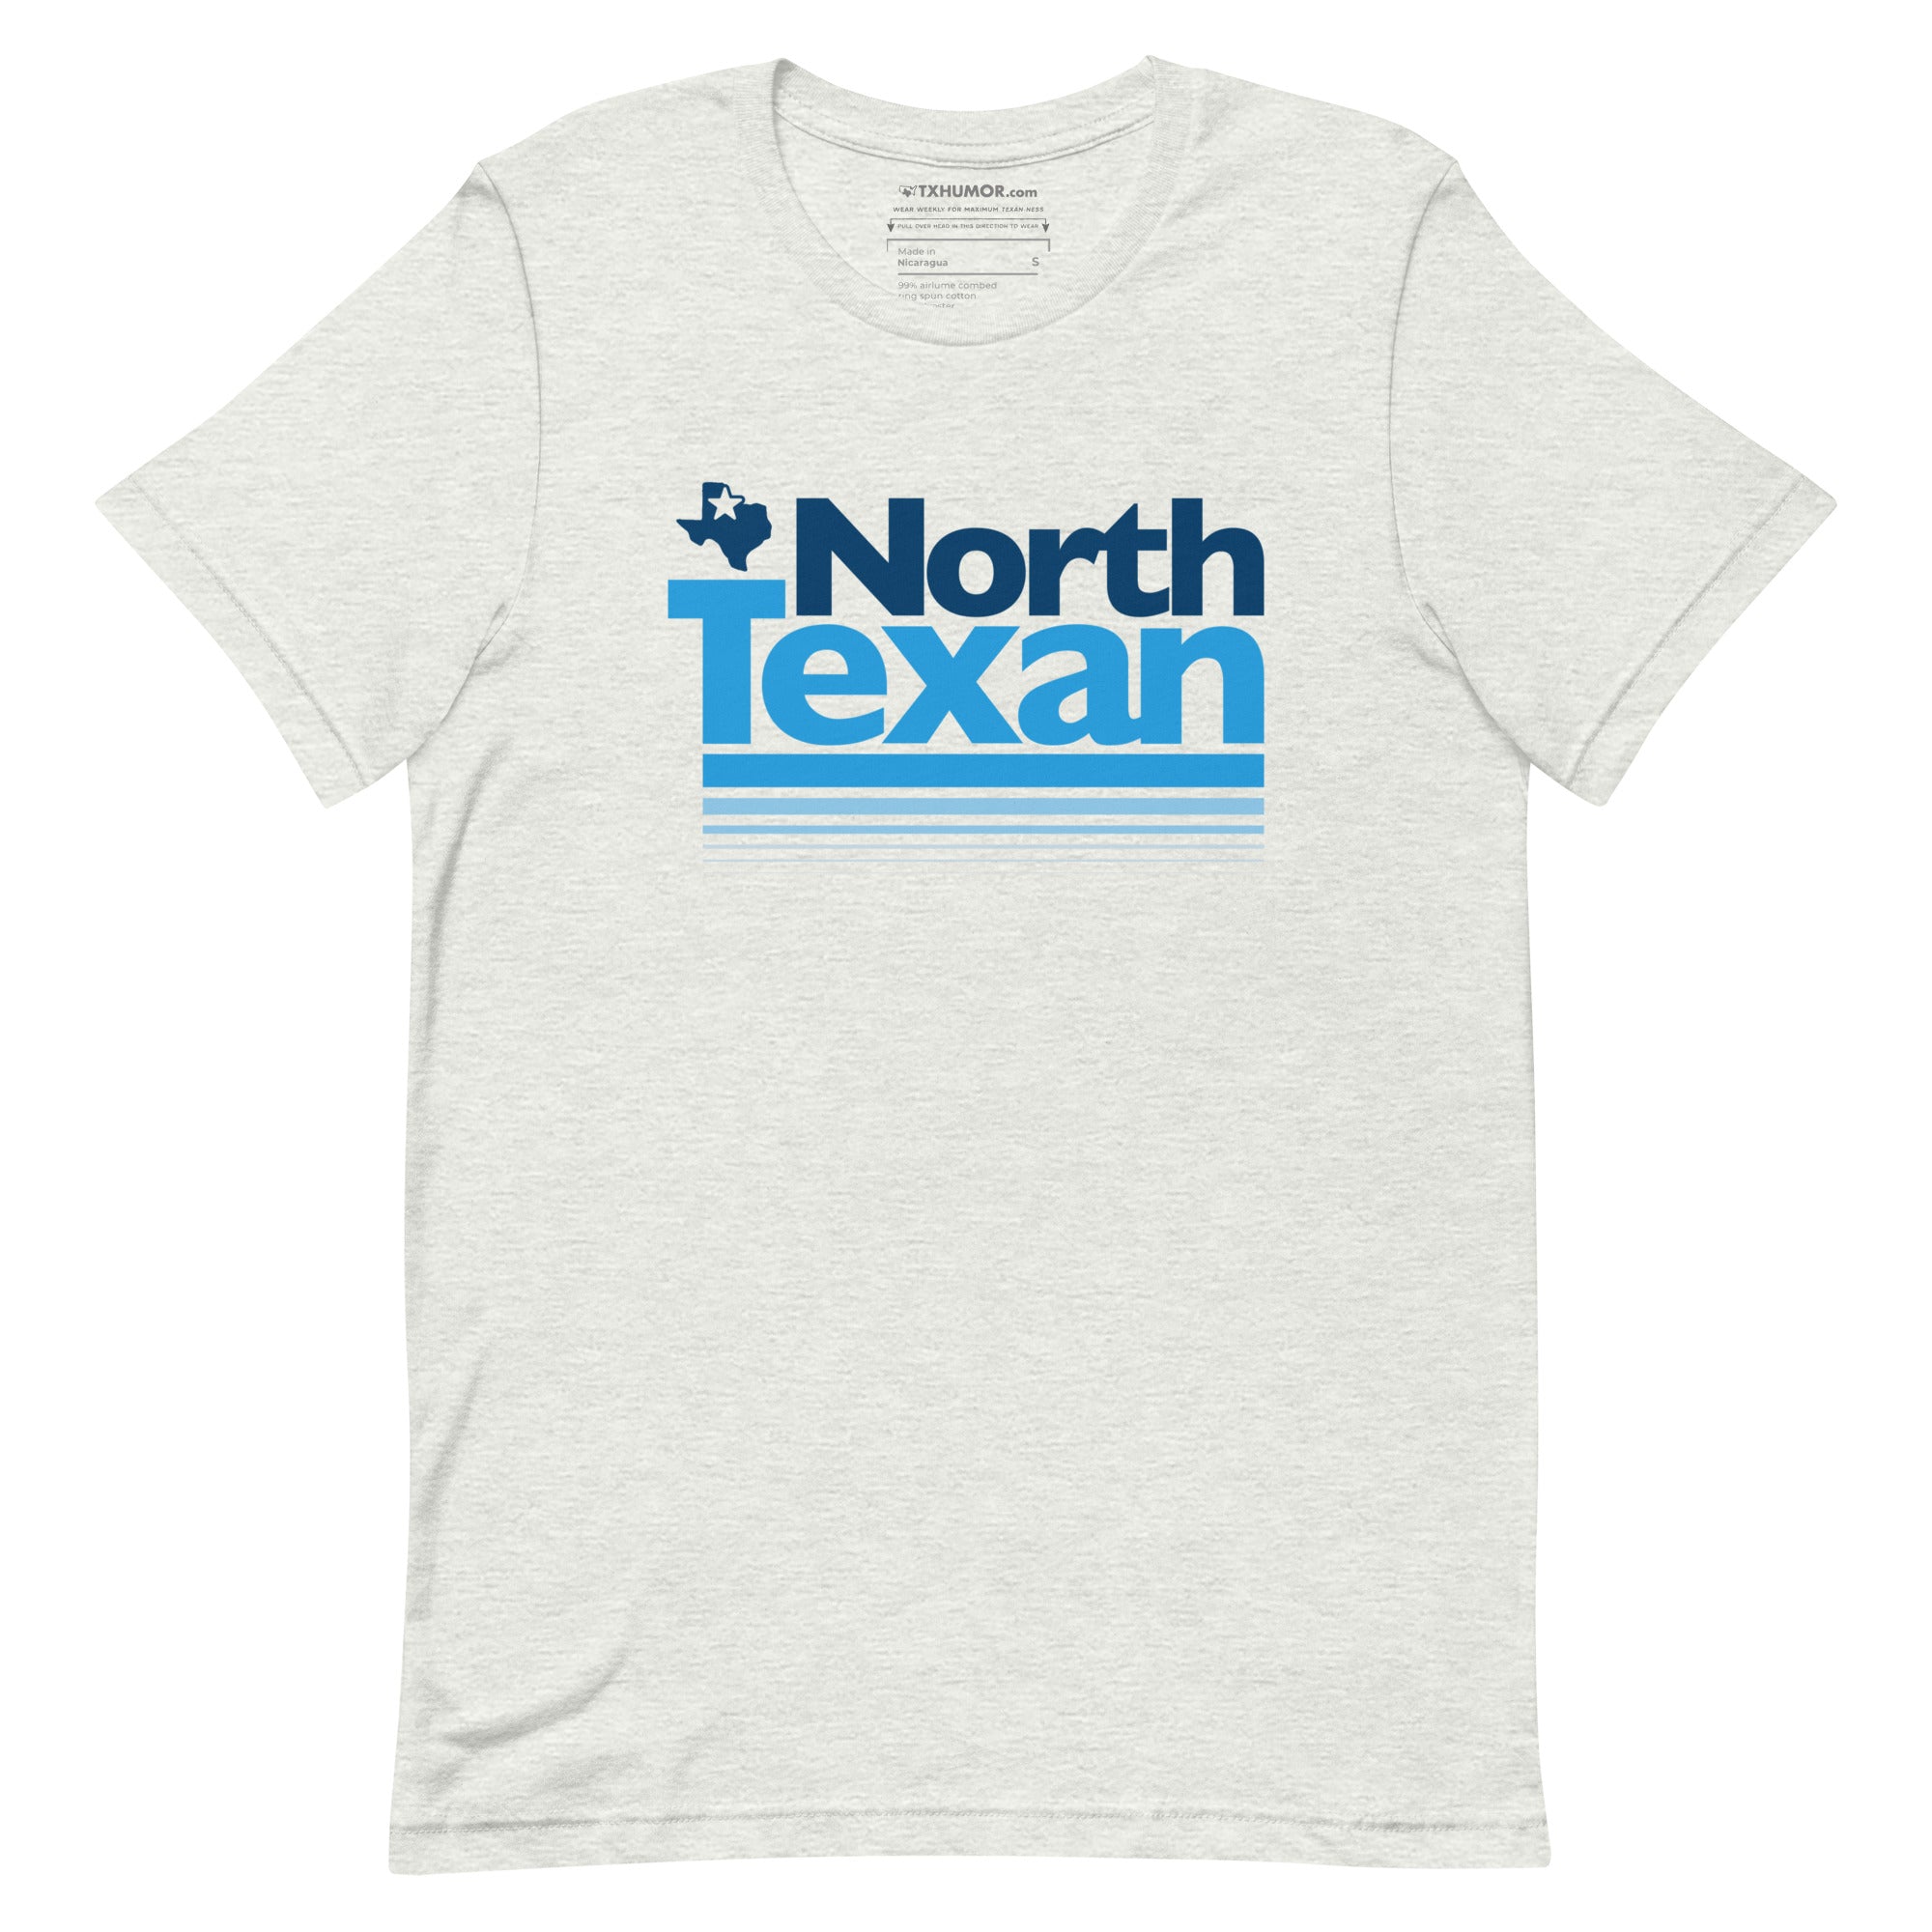 North Texan T-shirt